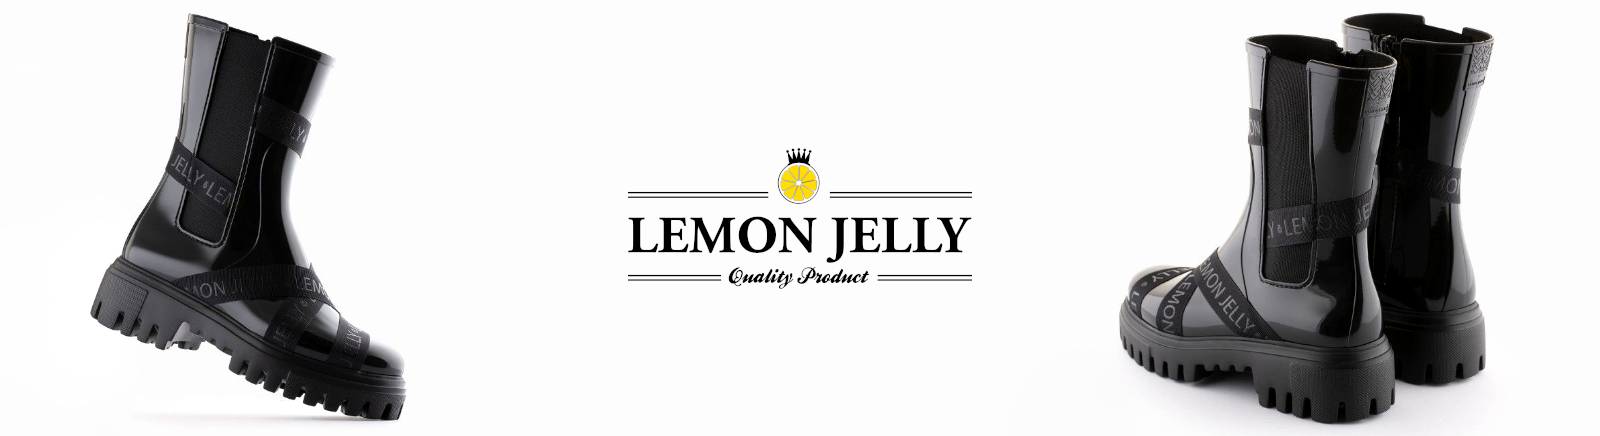 Lemon Jelly Markenschuhe online bestellen im Prange Schuhe Shop